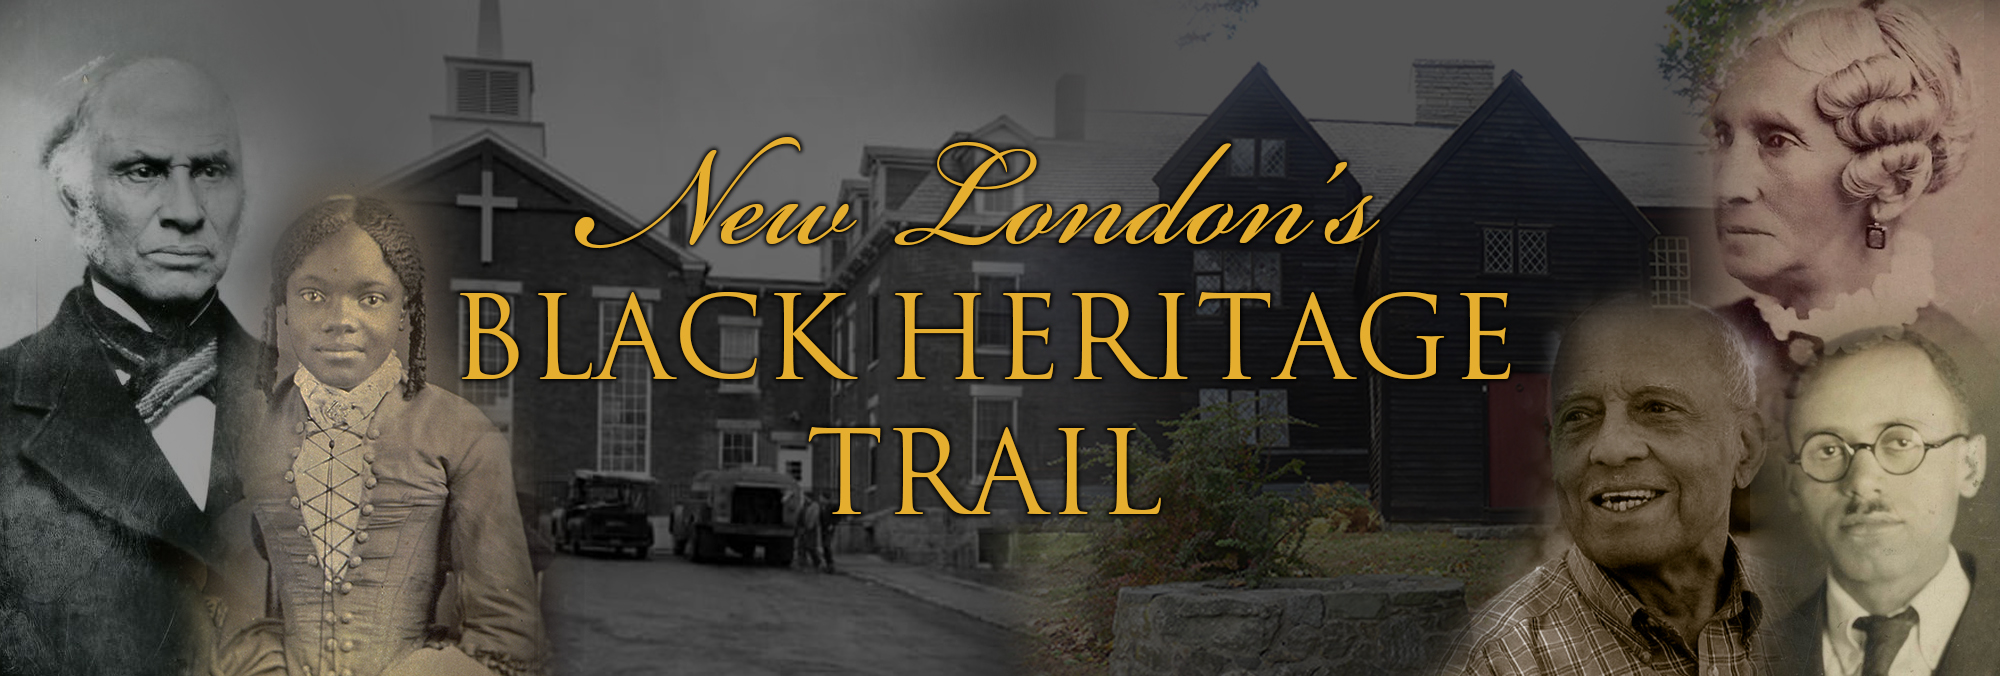 New London Black Heritage Trail